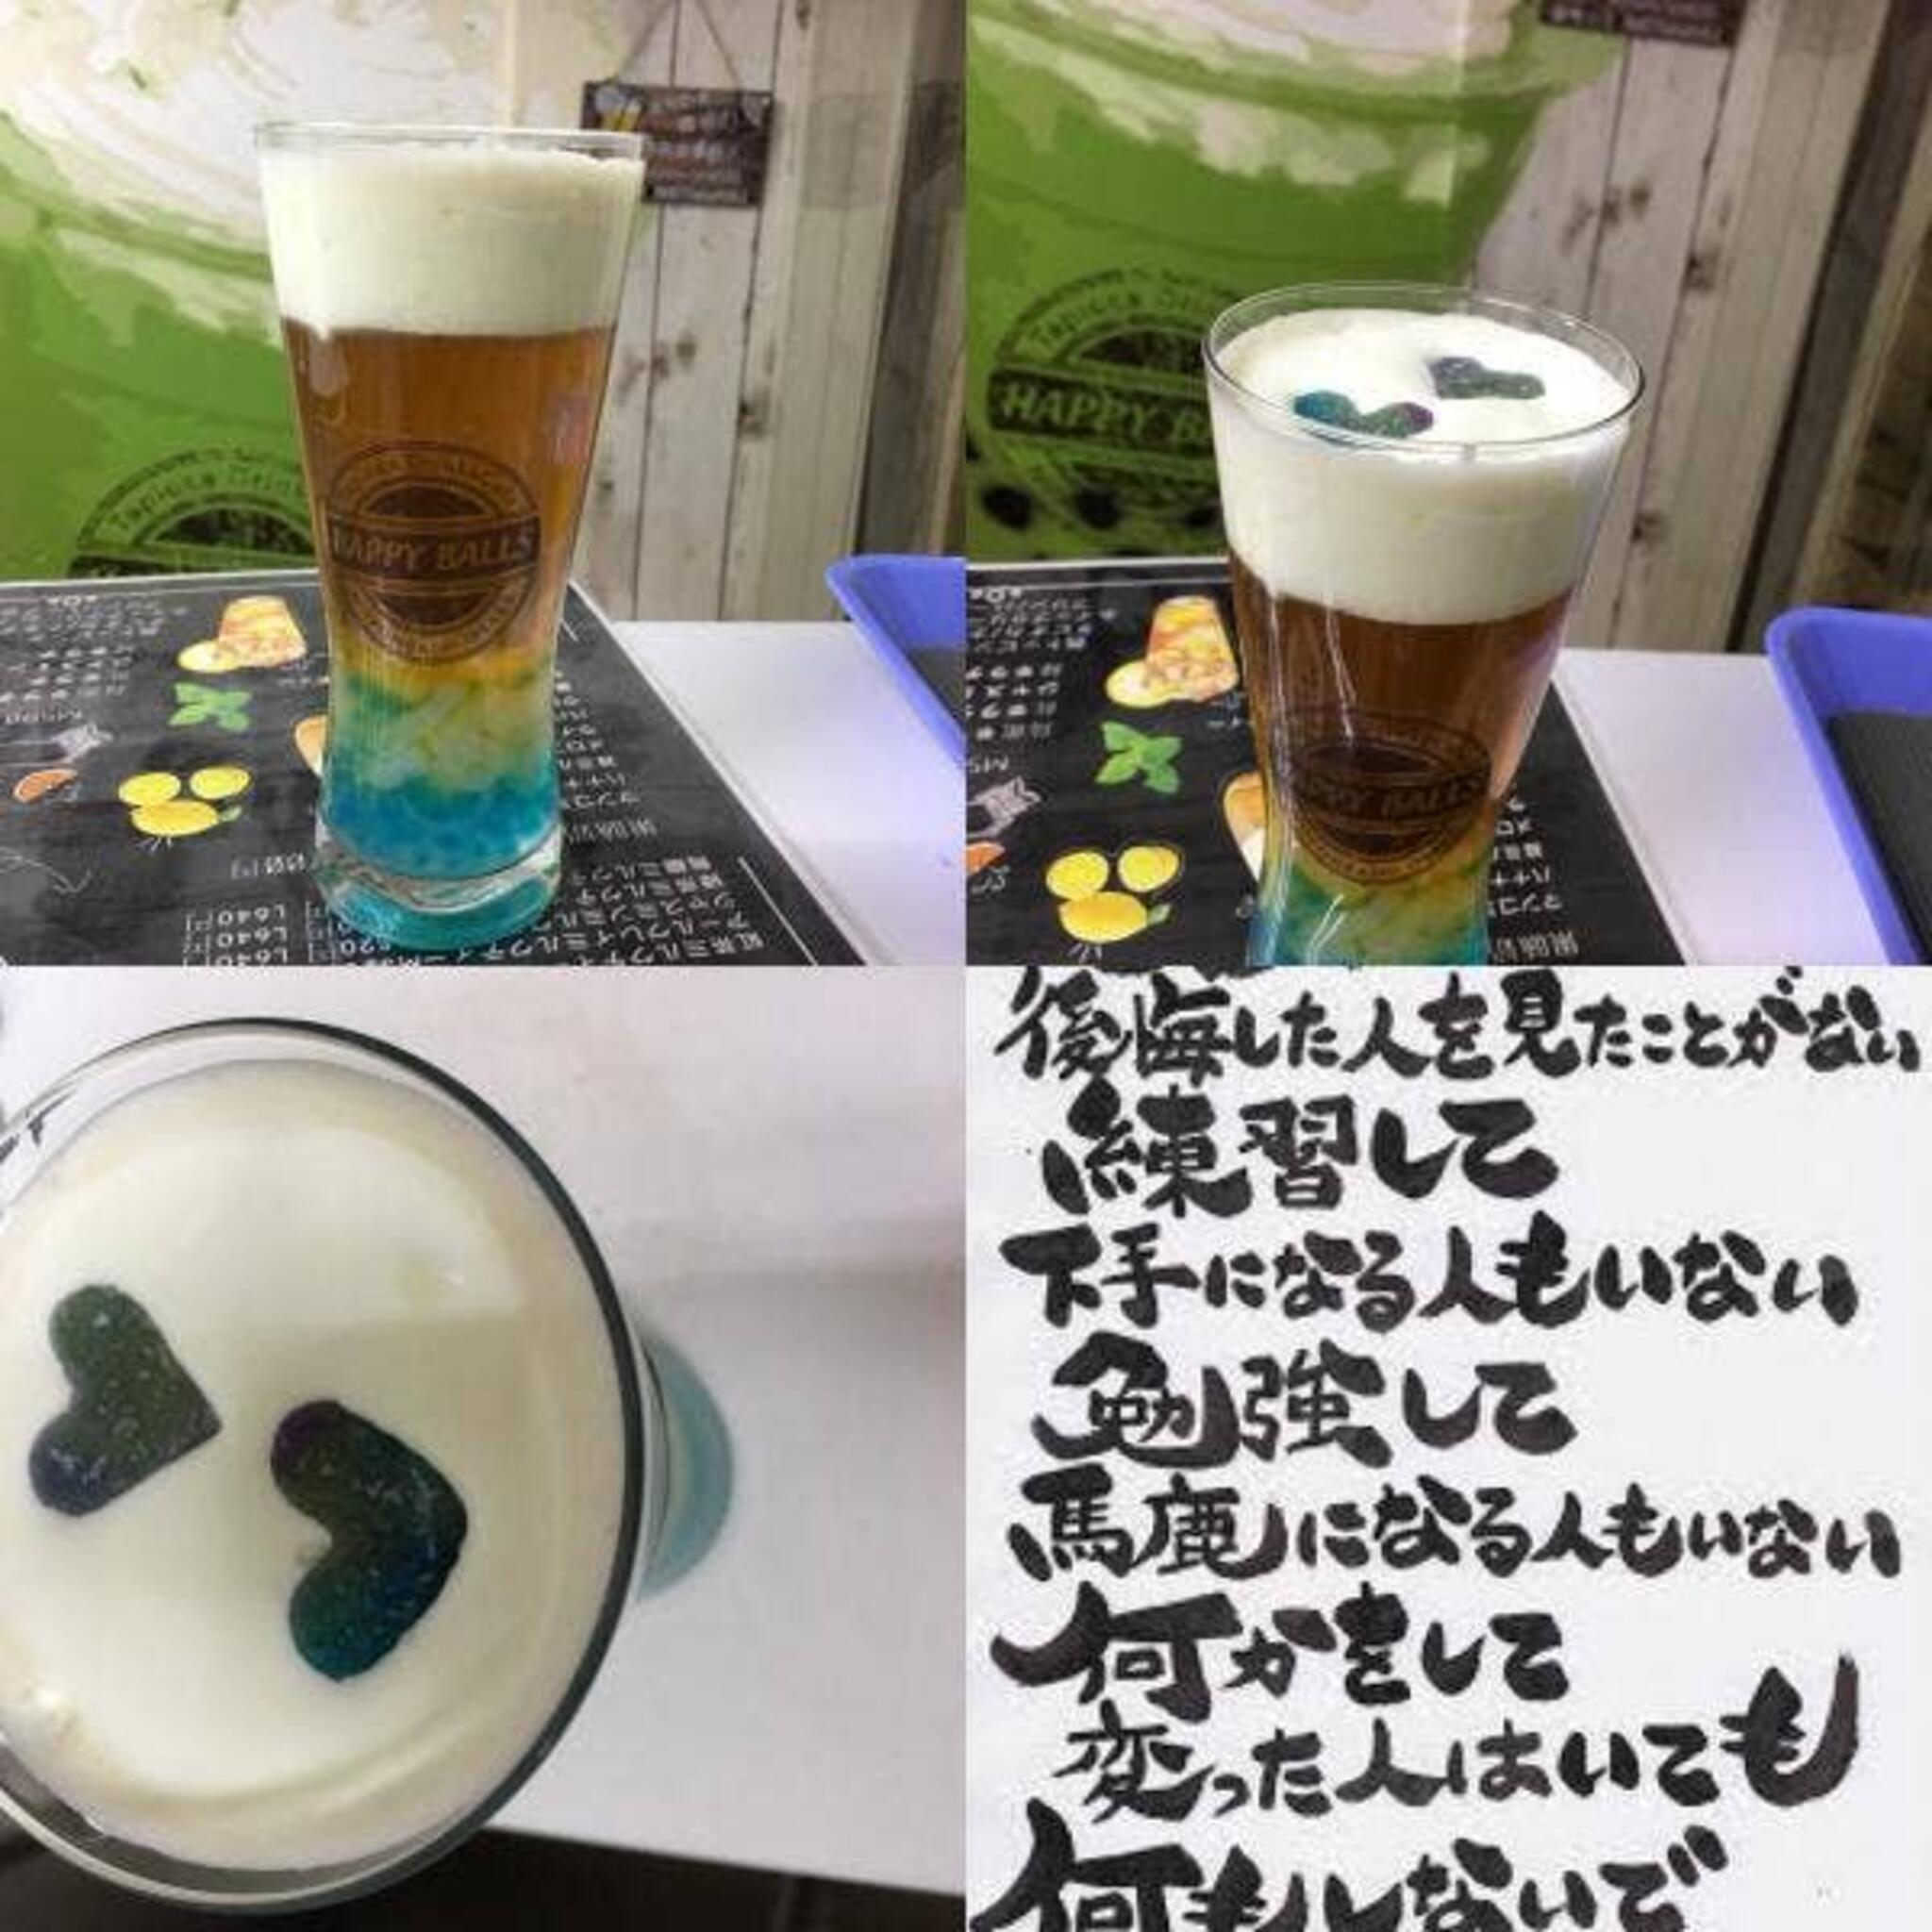 HAPPY BALLS TAPIOCA DRINK & CAFE 日本橋本店の代表写真9